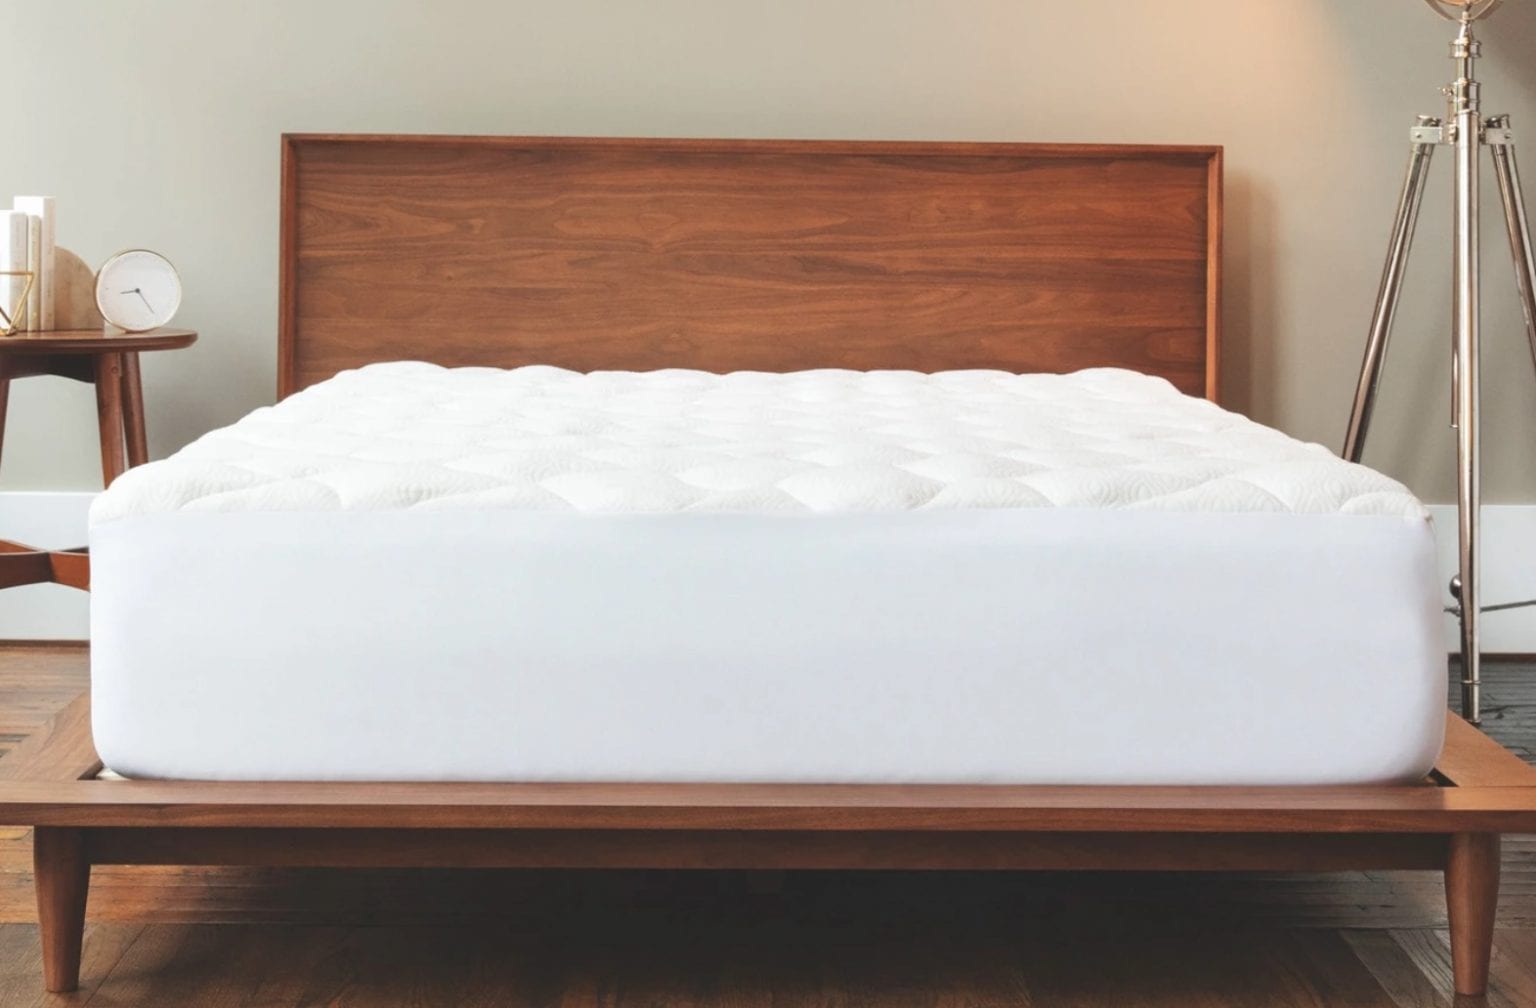 mattress pads consumerreports.org